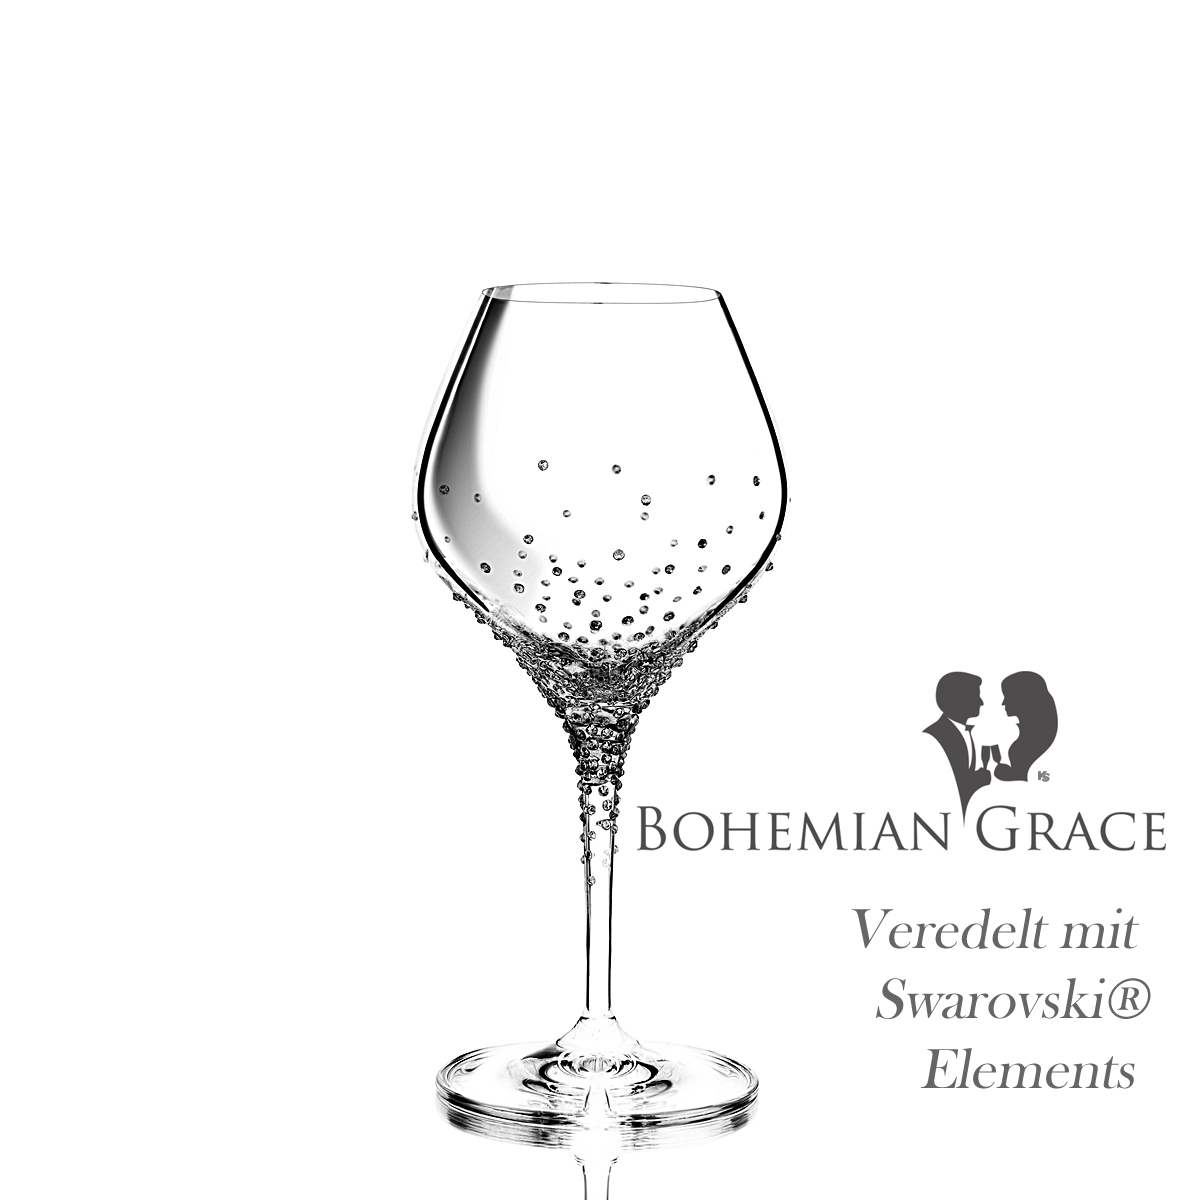 Weinglas 2Stk NEMESIS Bohemian Grace - Weissweingläser NEMESIS 2Stk, mit Swarovski Elements